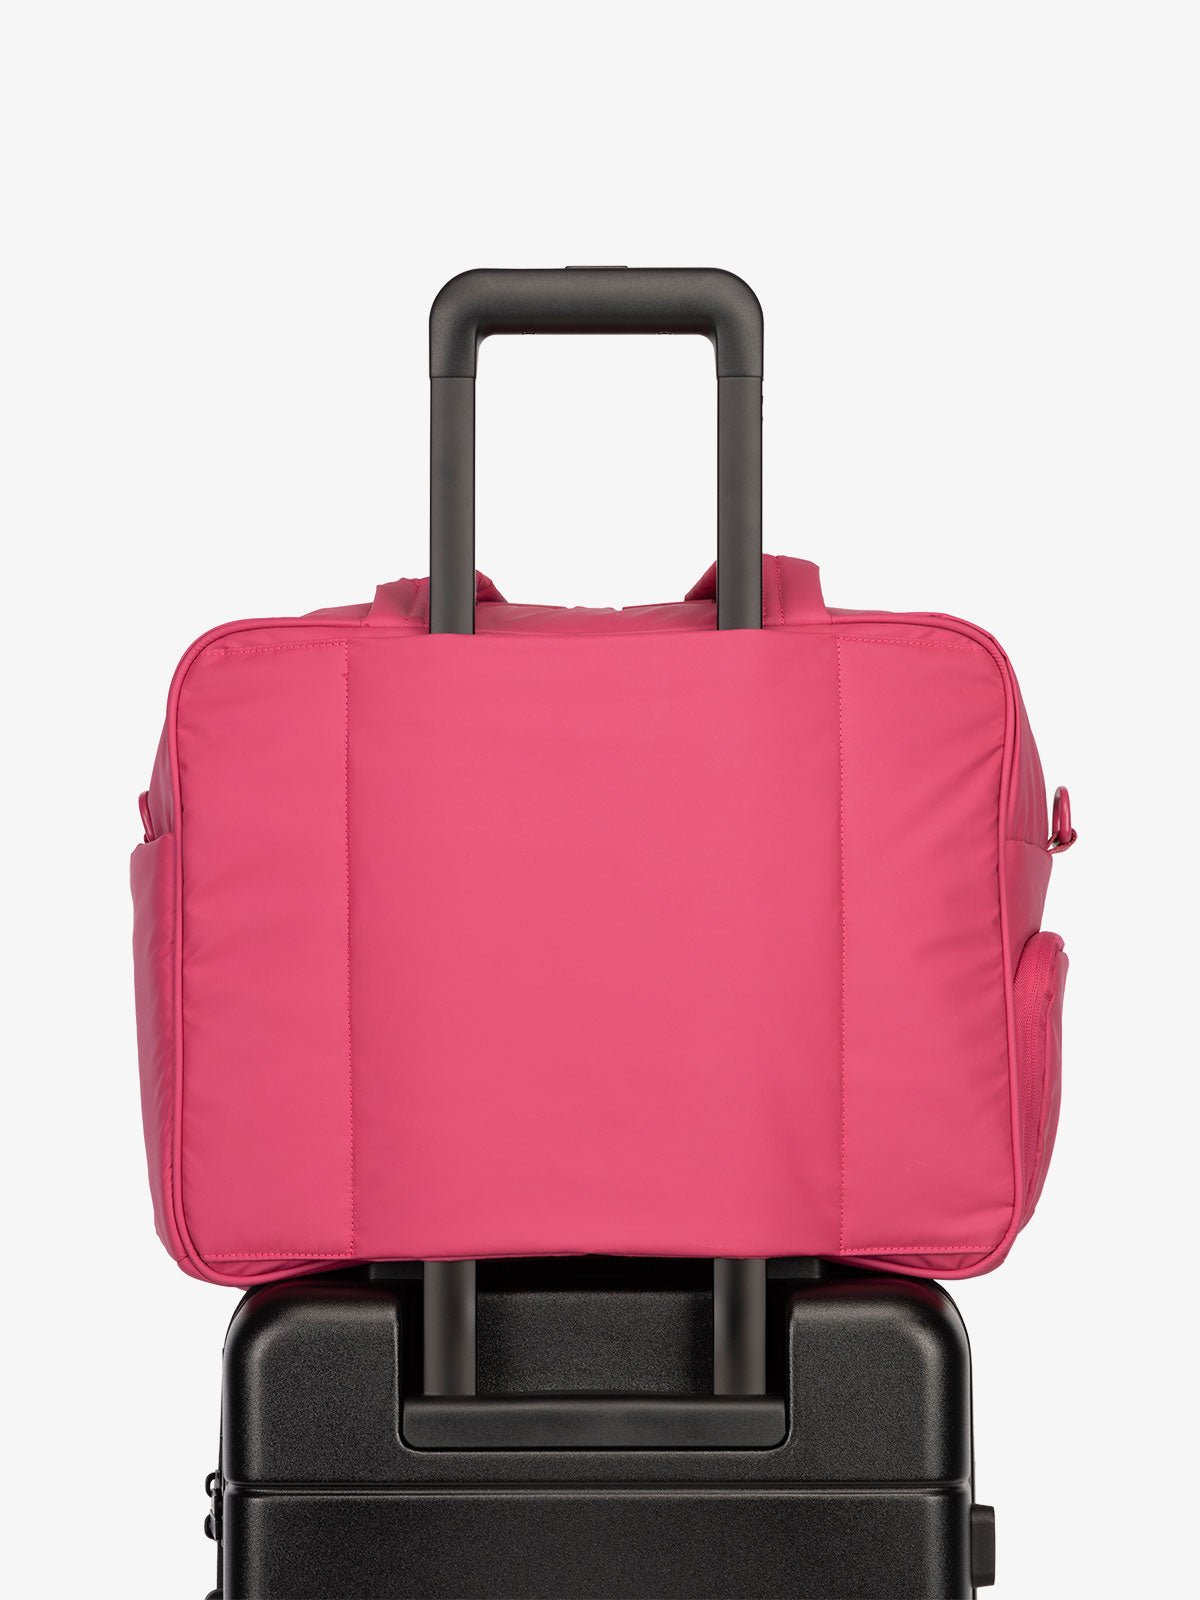 CALPAK Luka Duffel bag with luggage trolley sleeve in hot pink dragonfruit